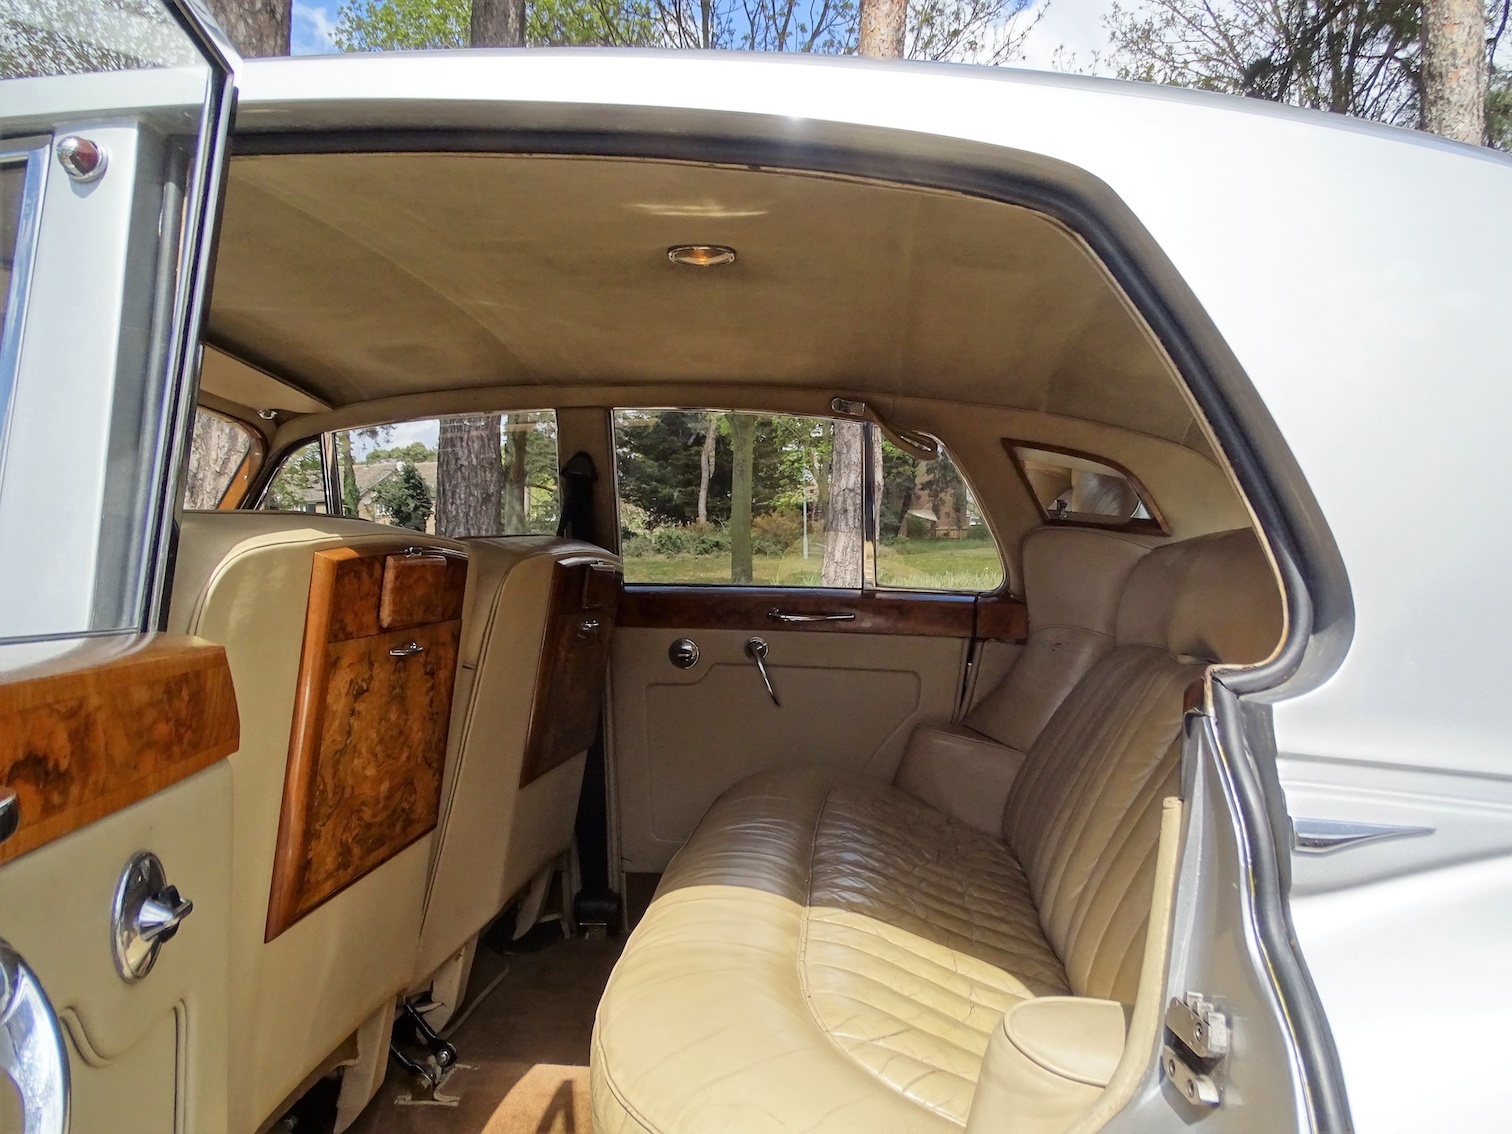 Interior of Rolls Royce Silver Cloud II